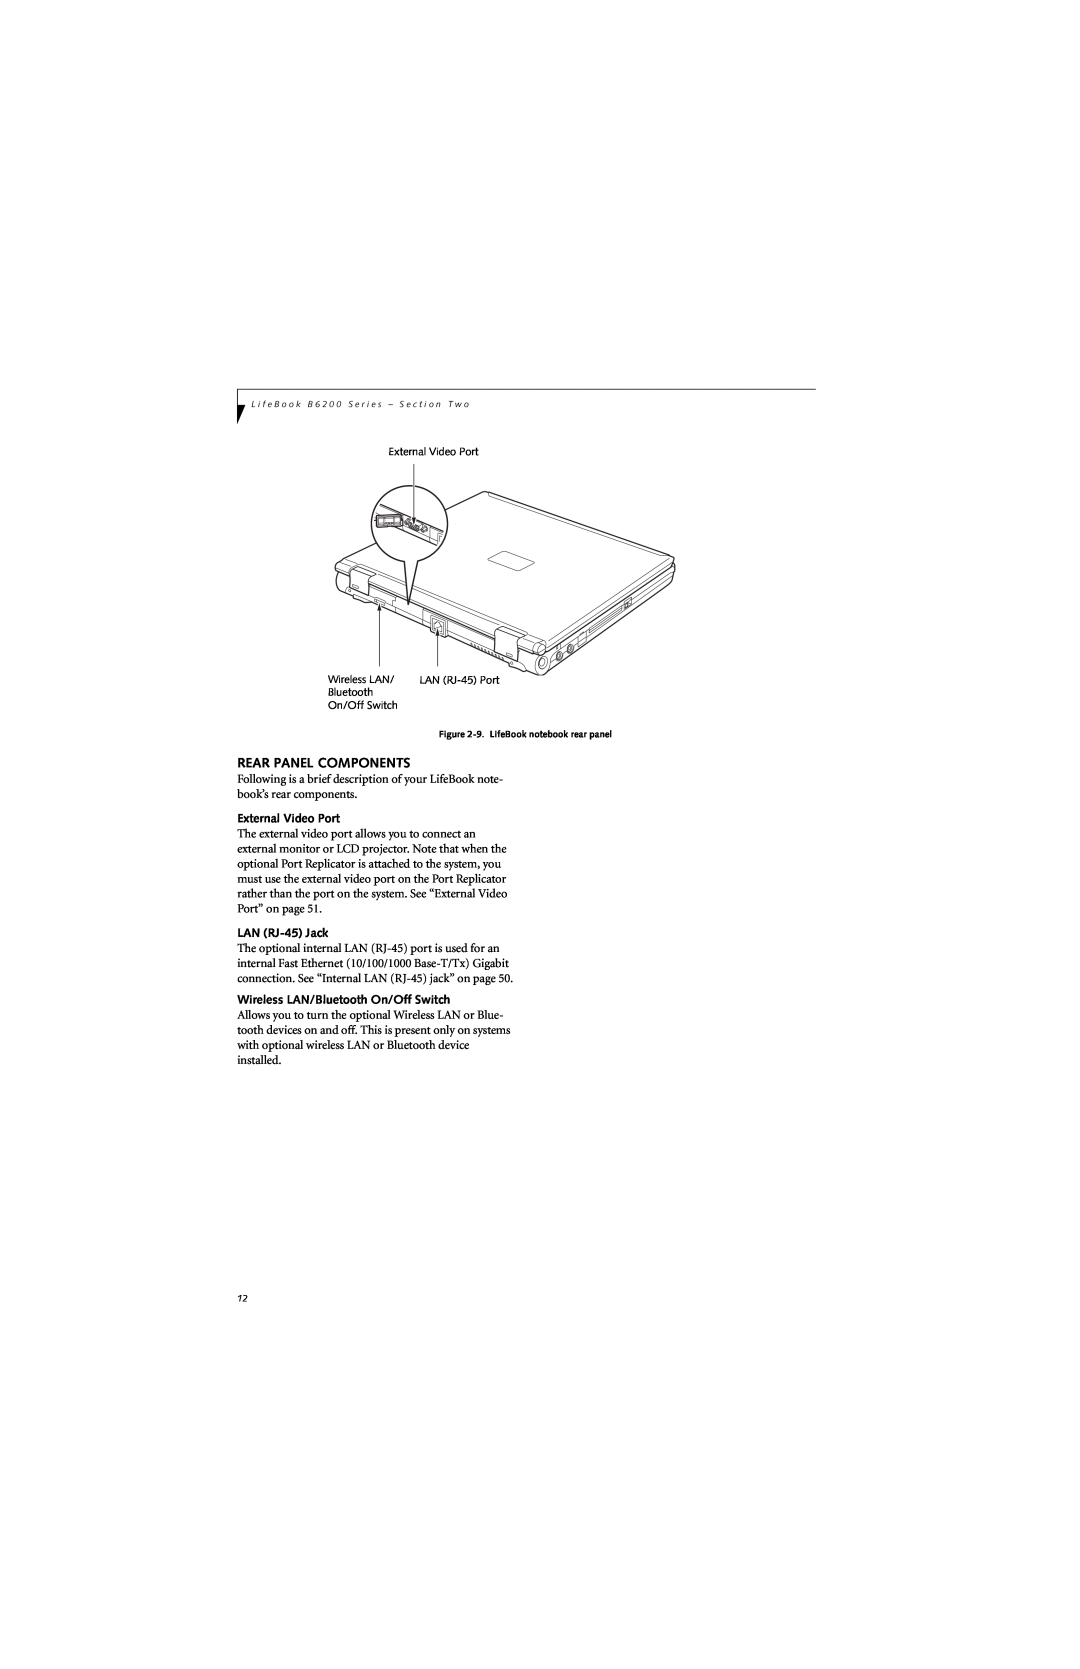 Fujitsu B6220 manual Rear Panel Components, External Video Port, LAN RJ-45 Jack, Wireless LAN/Bluetooth On/Off Switch 